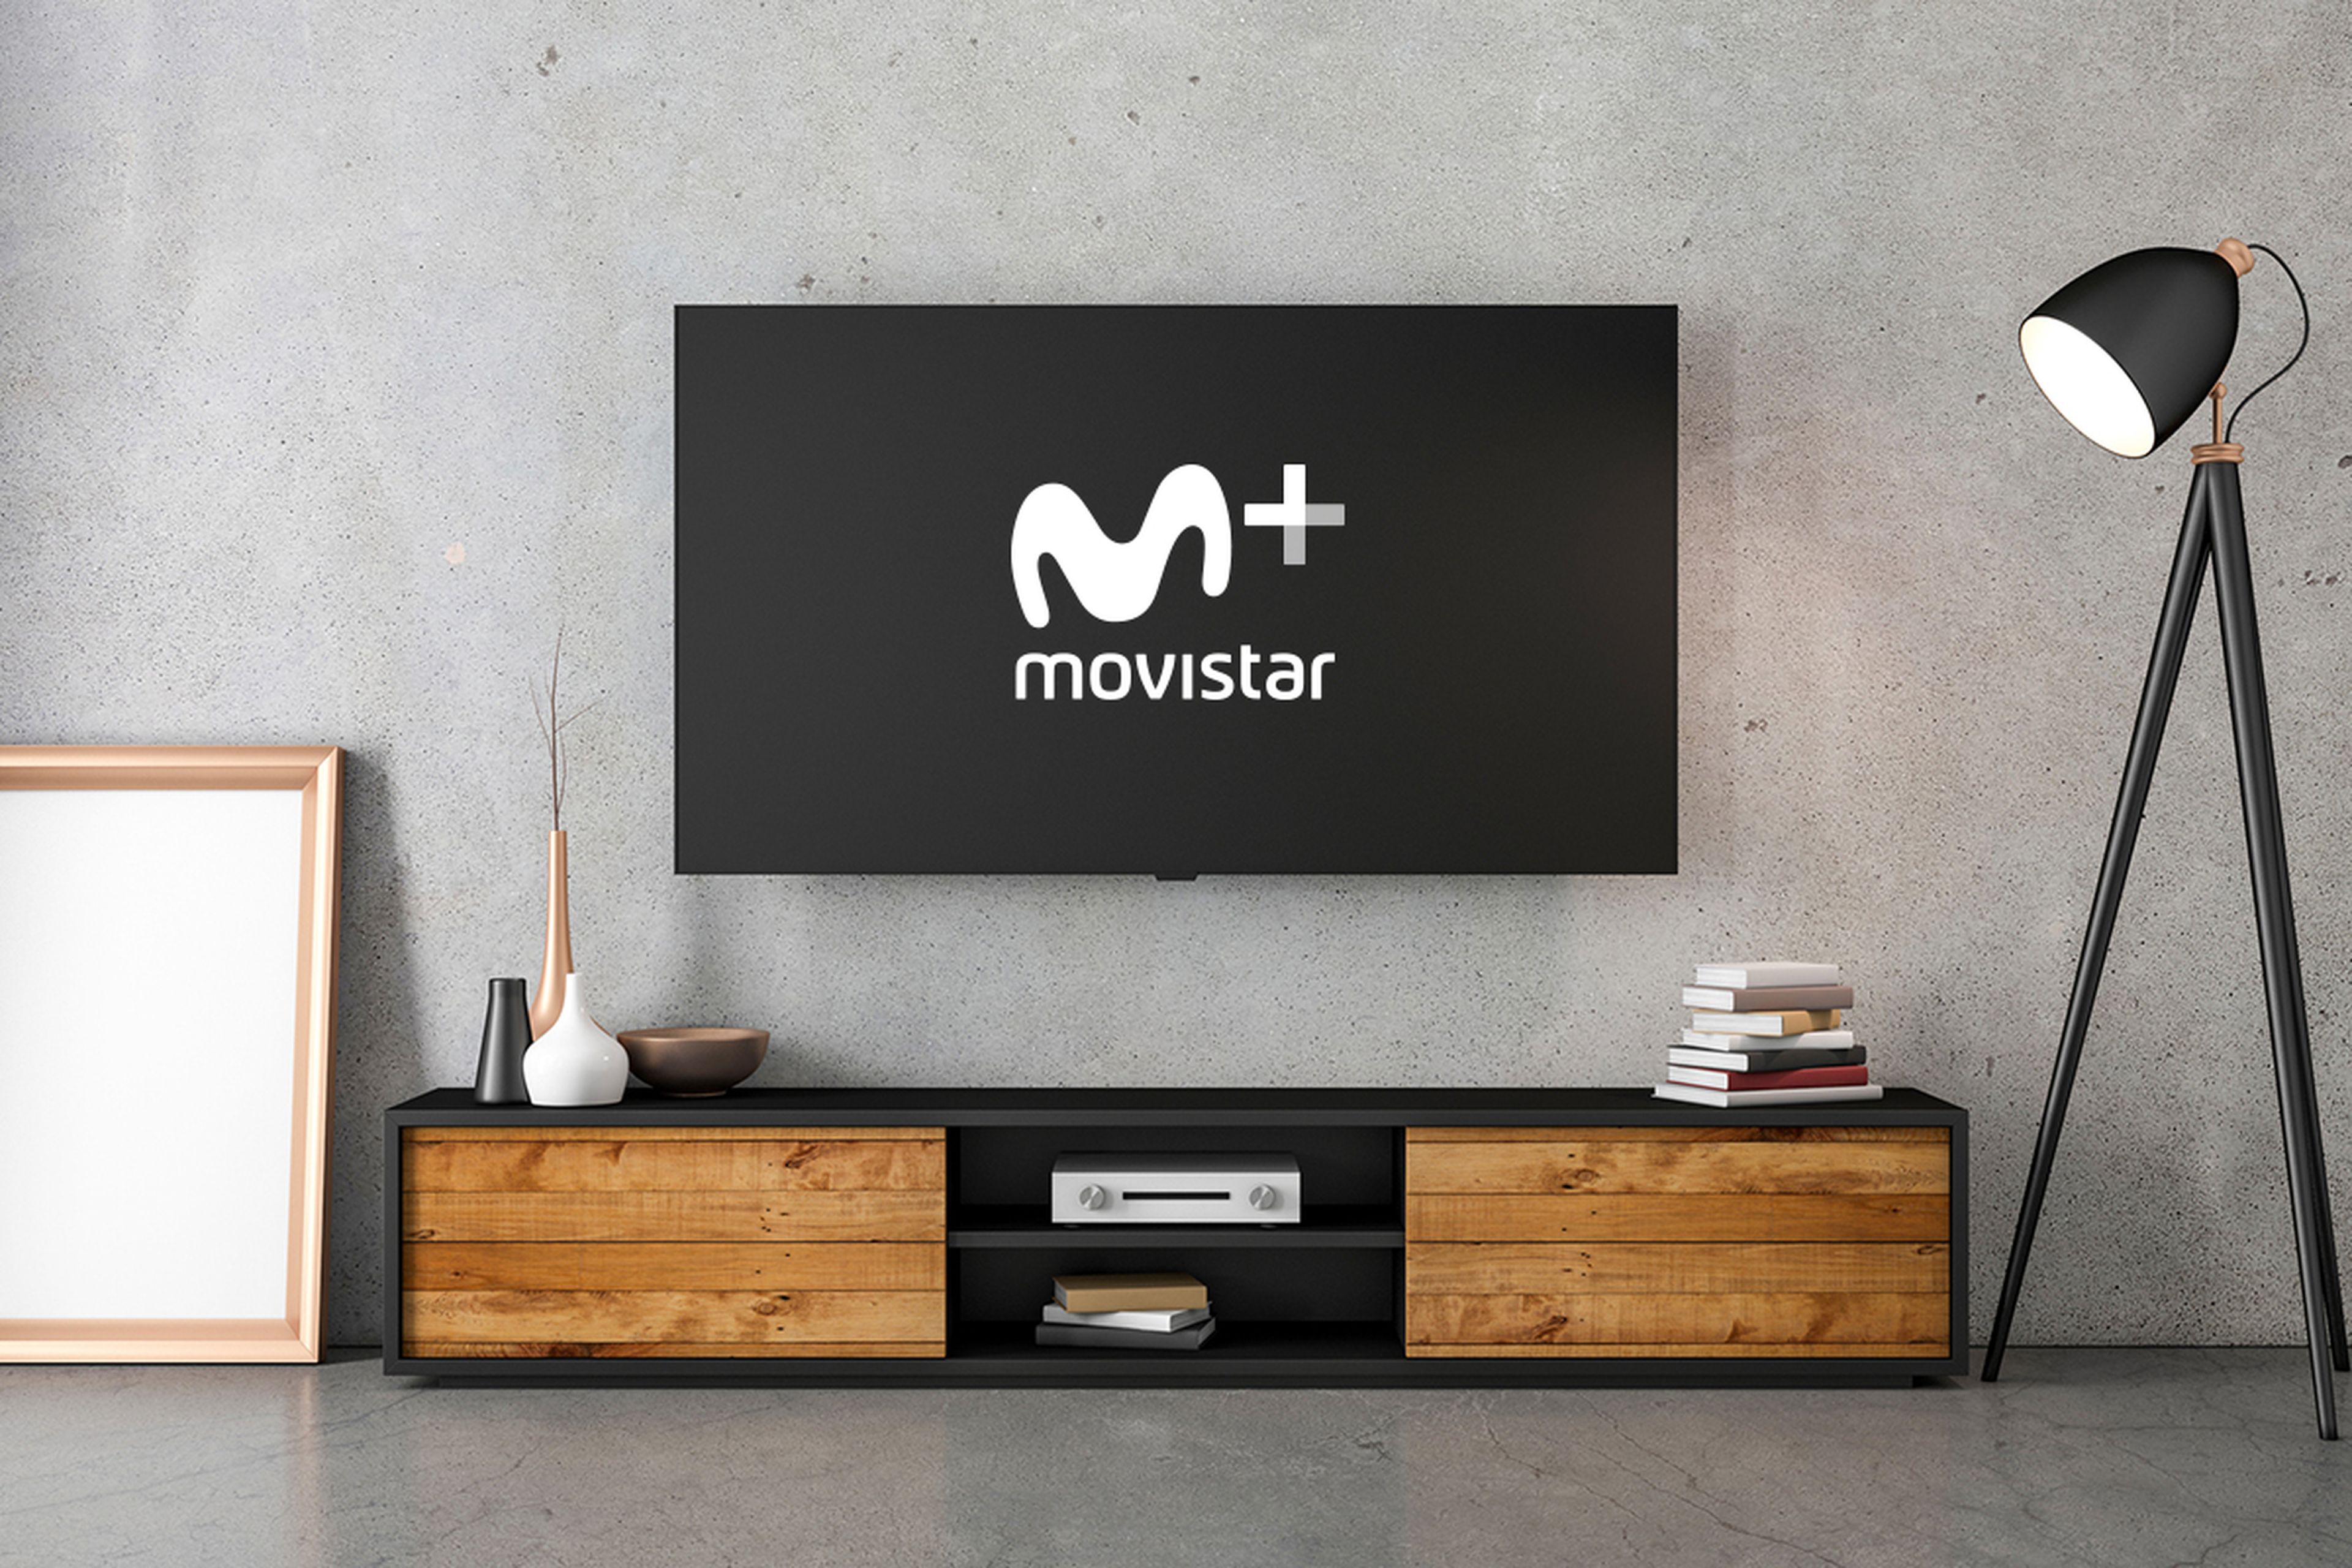 Movistar Plus